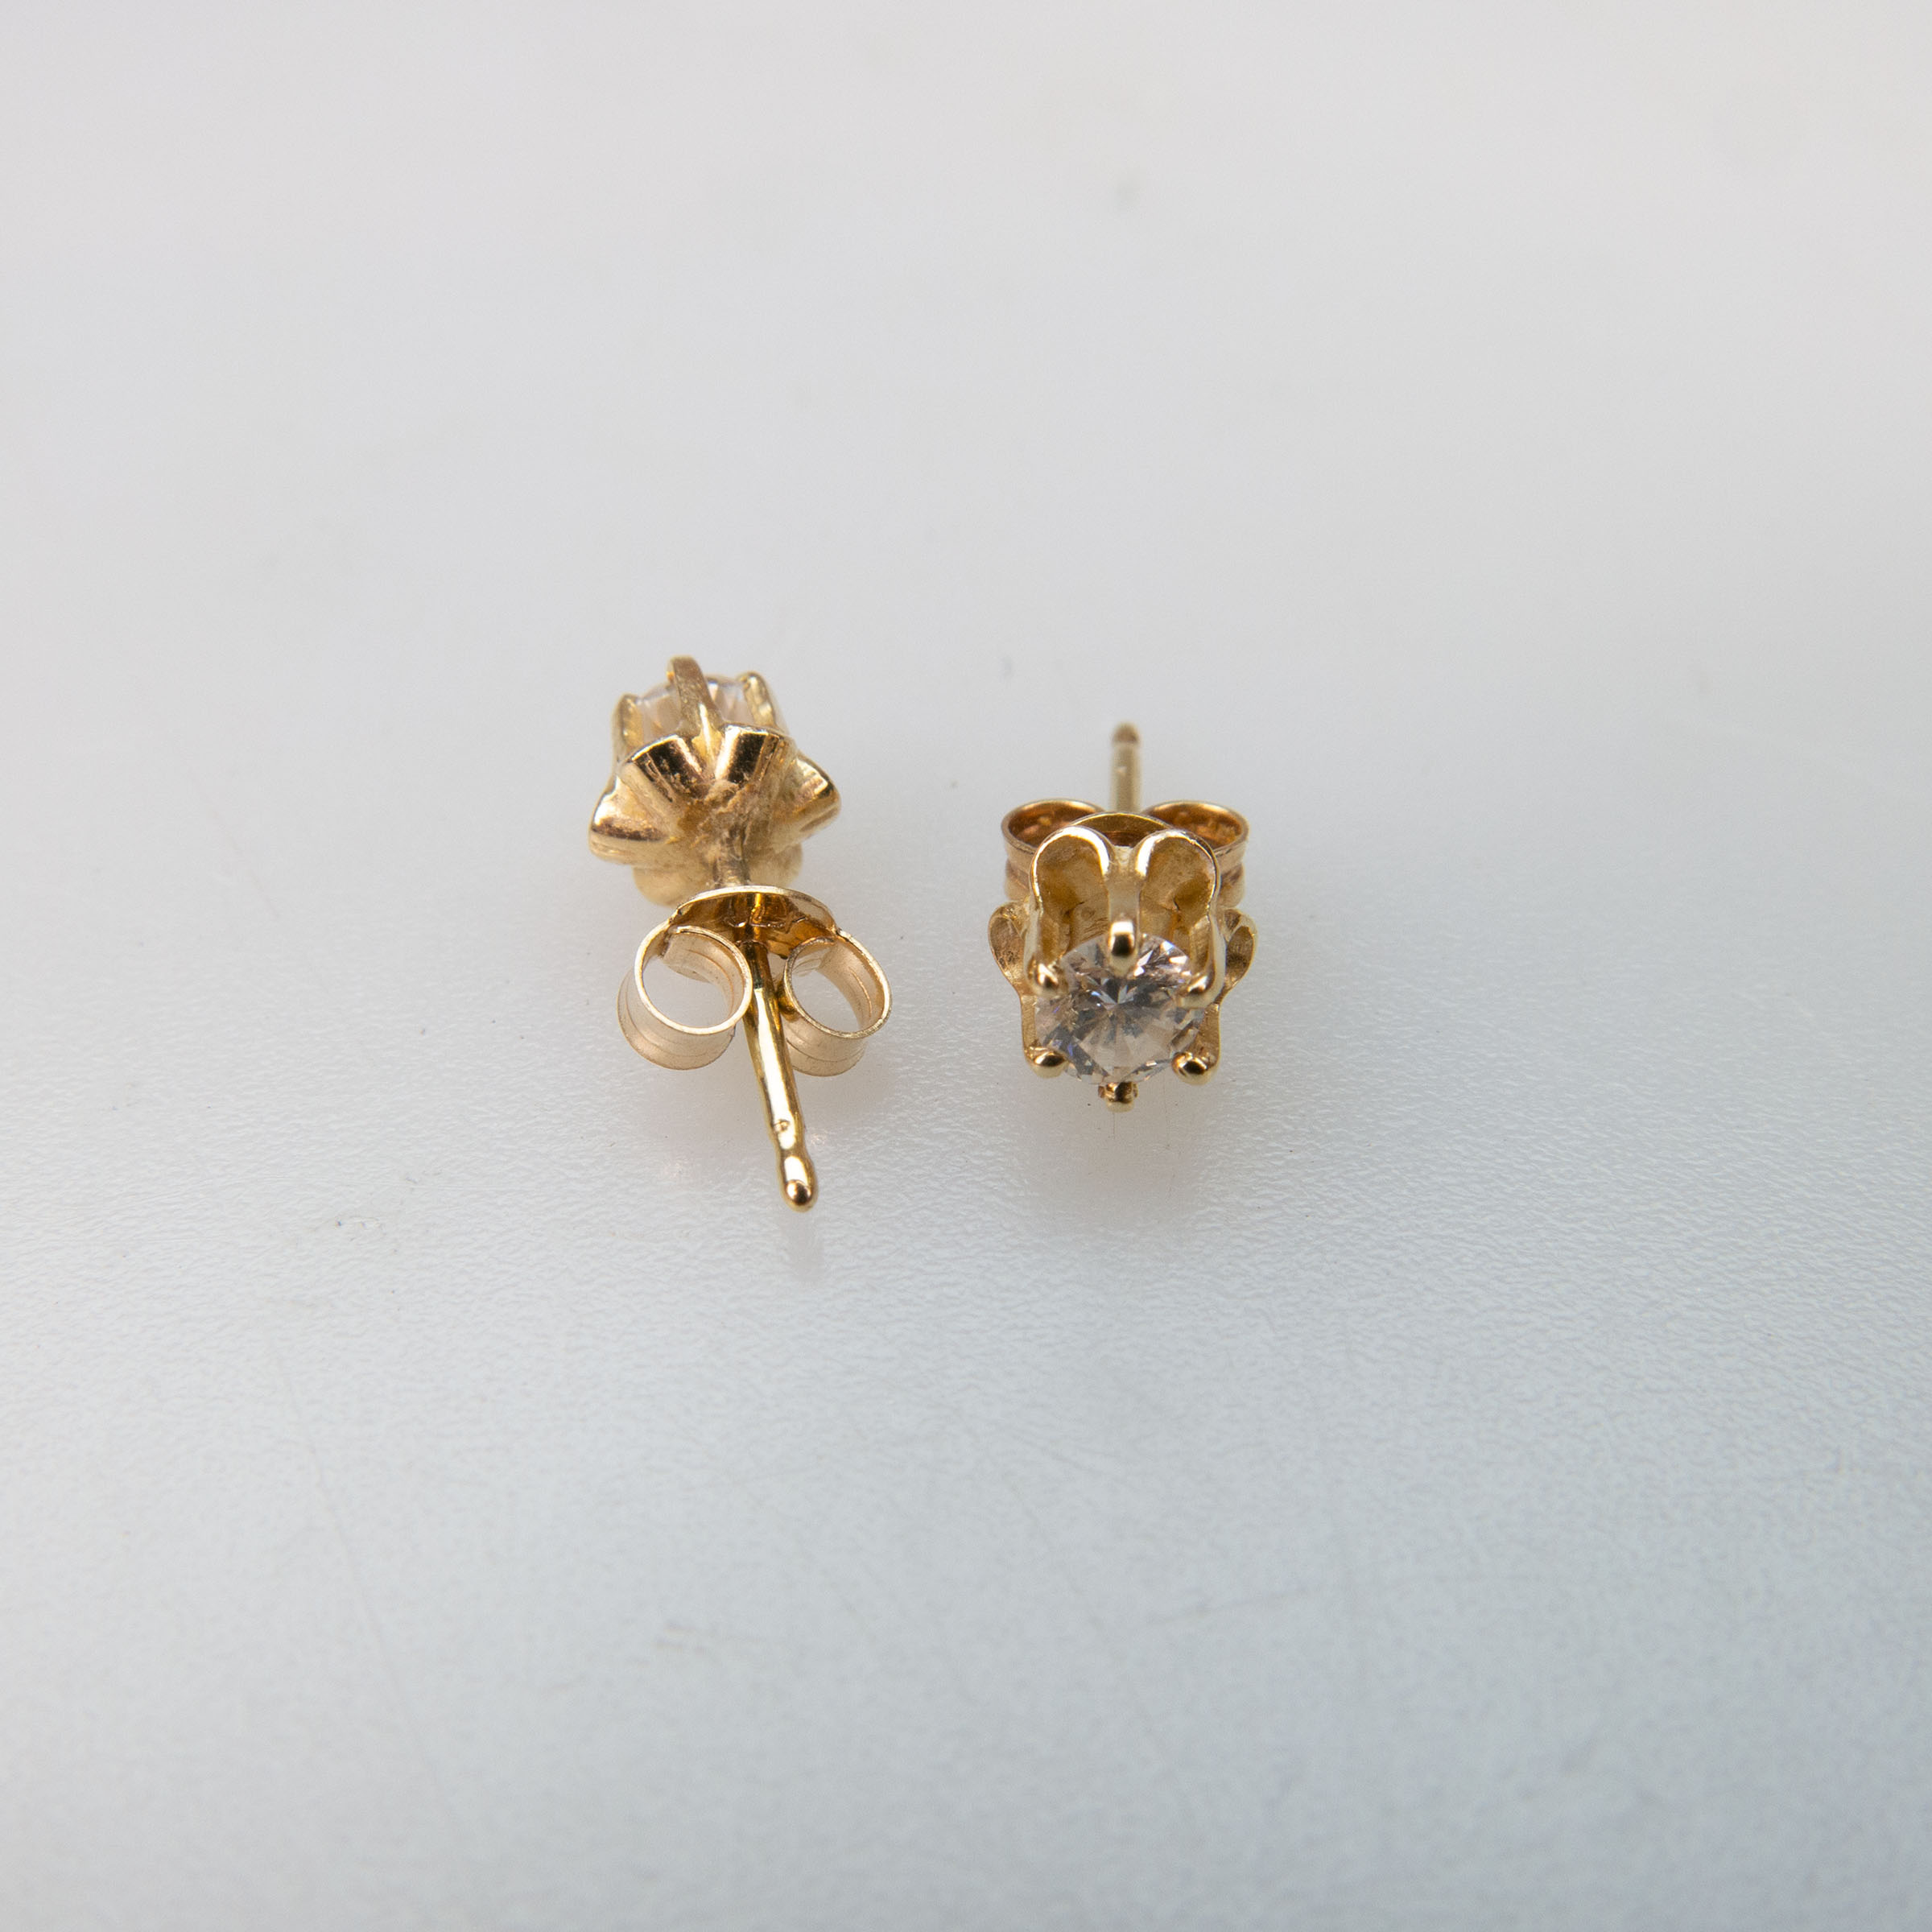 Pair Of 14k Yellow Gold Stud Earrings